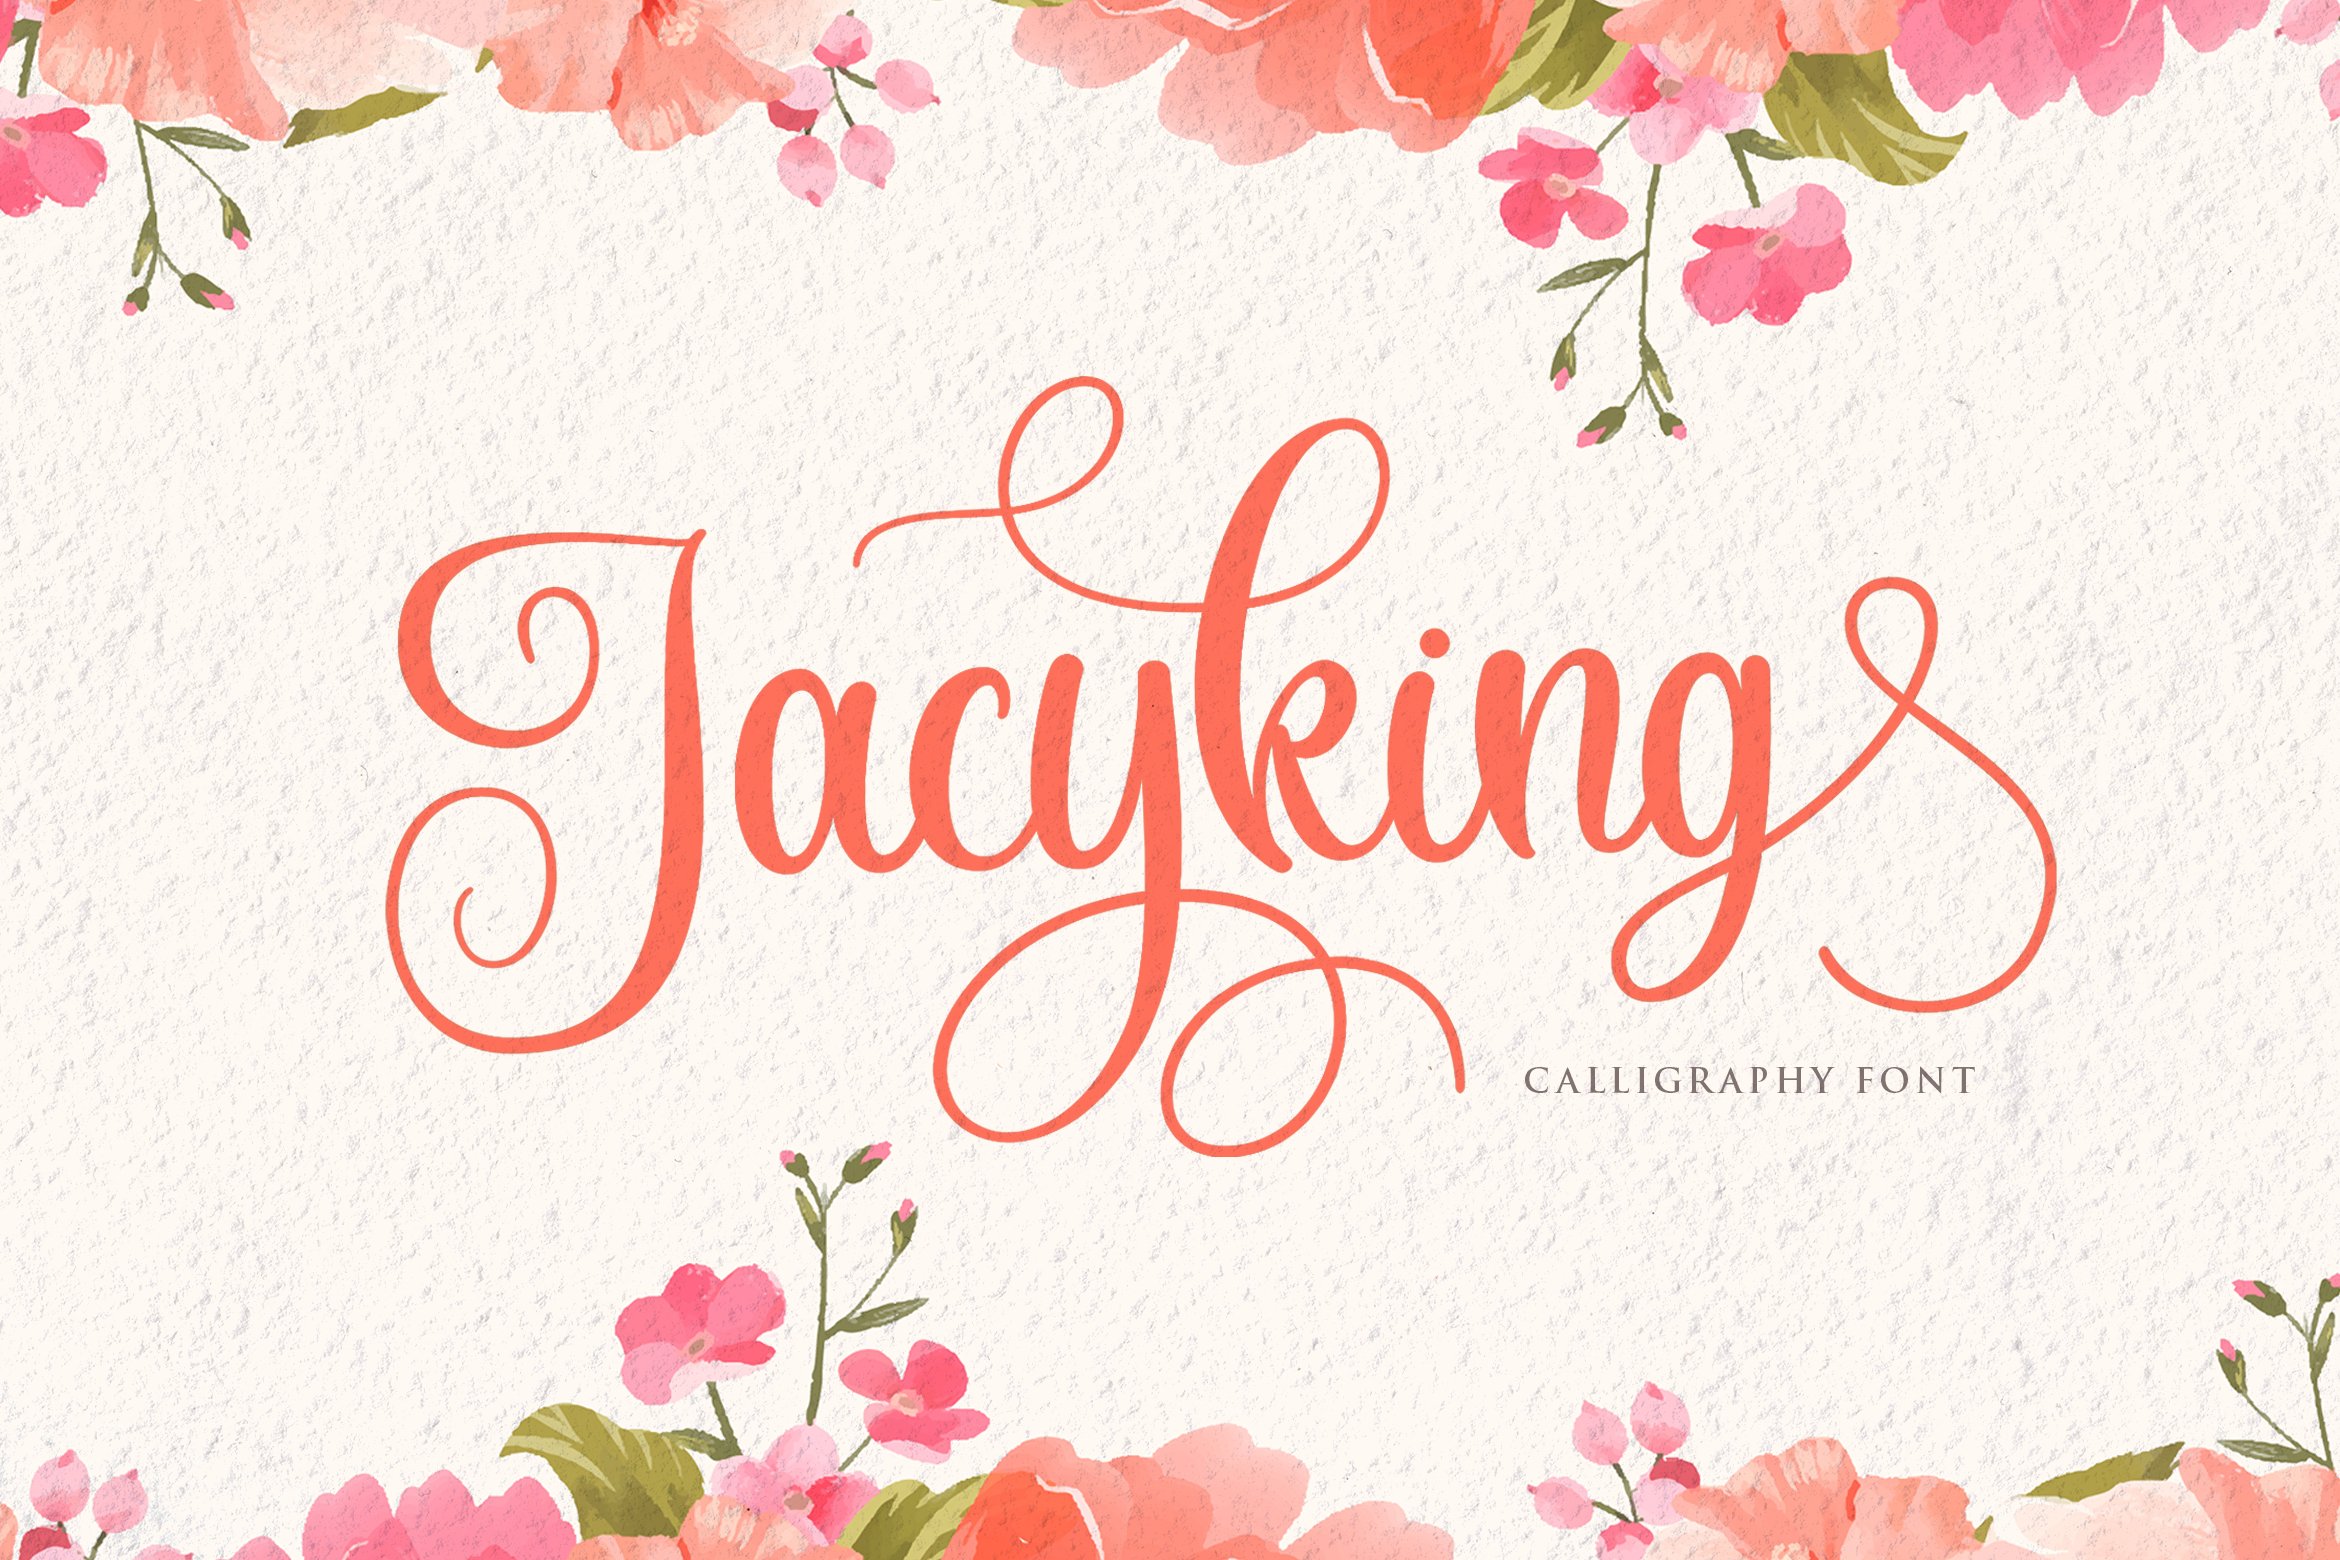 Jacyking - Lovely Script Font cover image.